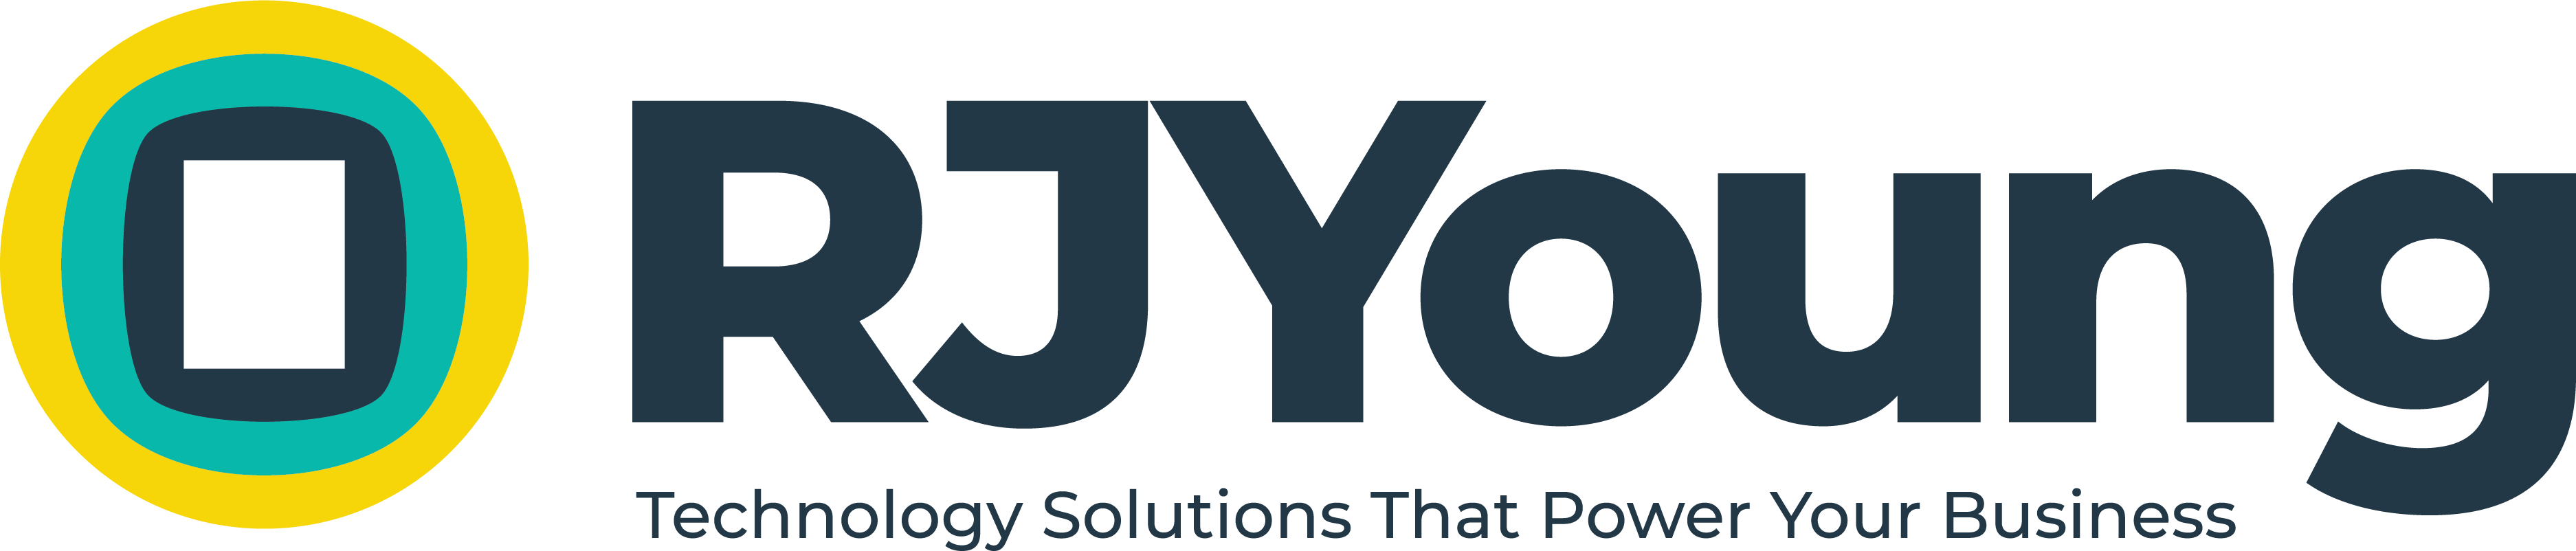 RJY Logo_Full Color Tagline